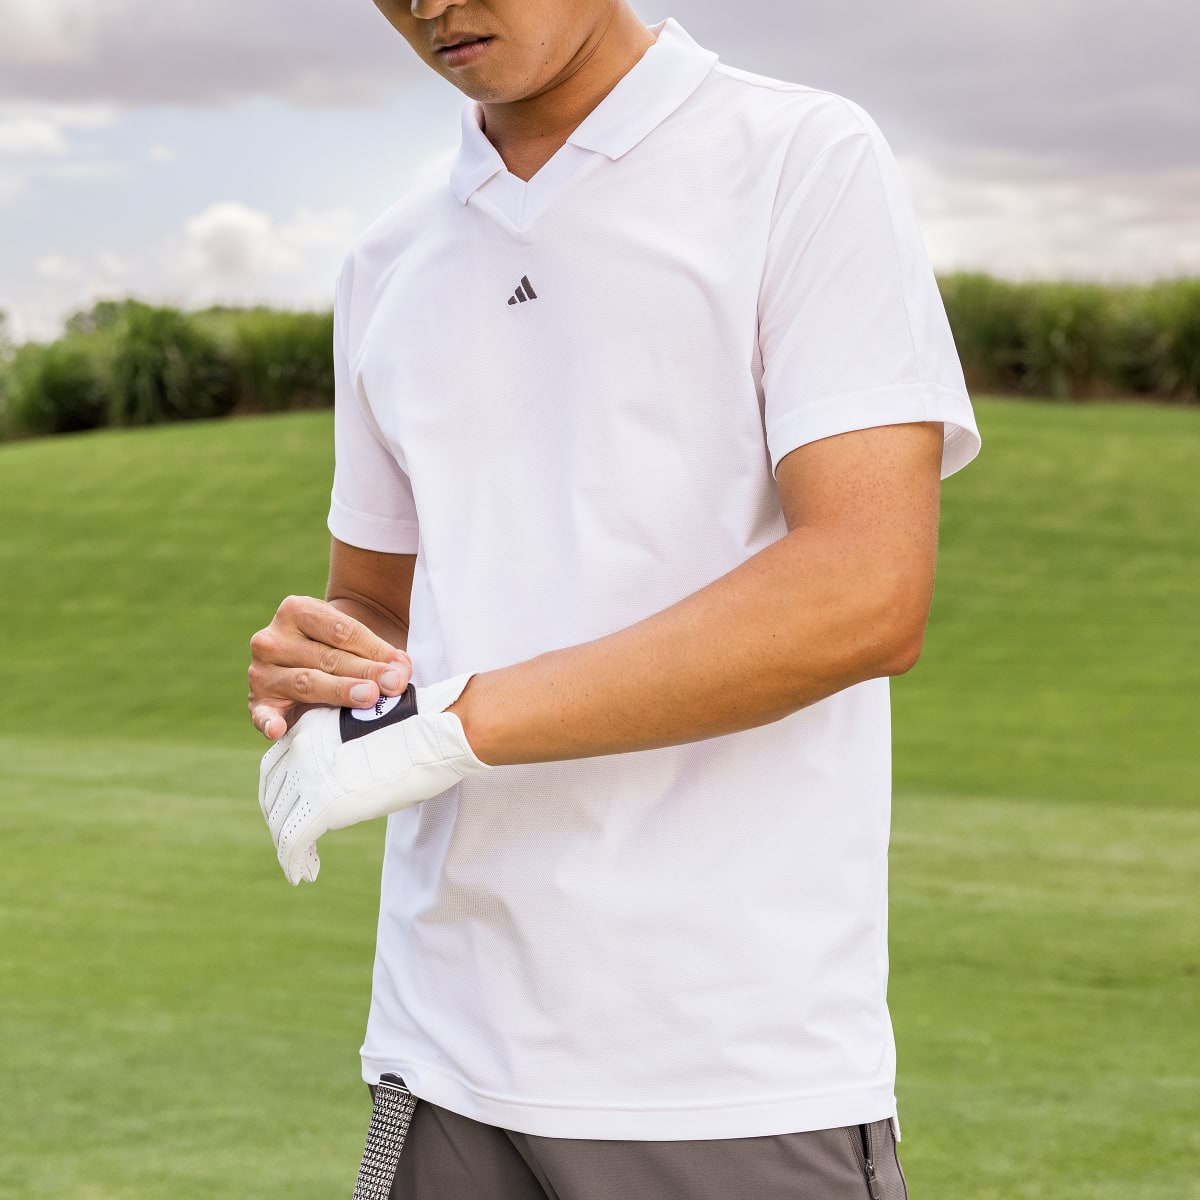 Adidas Ultimate365 Twistknit Piqué Polo Shirt. 9